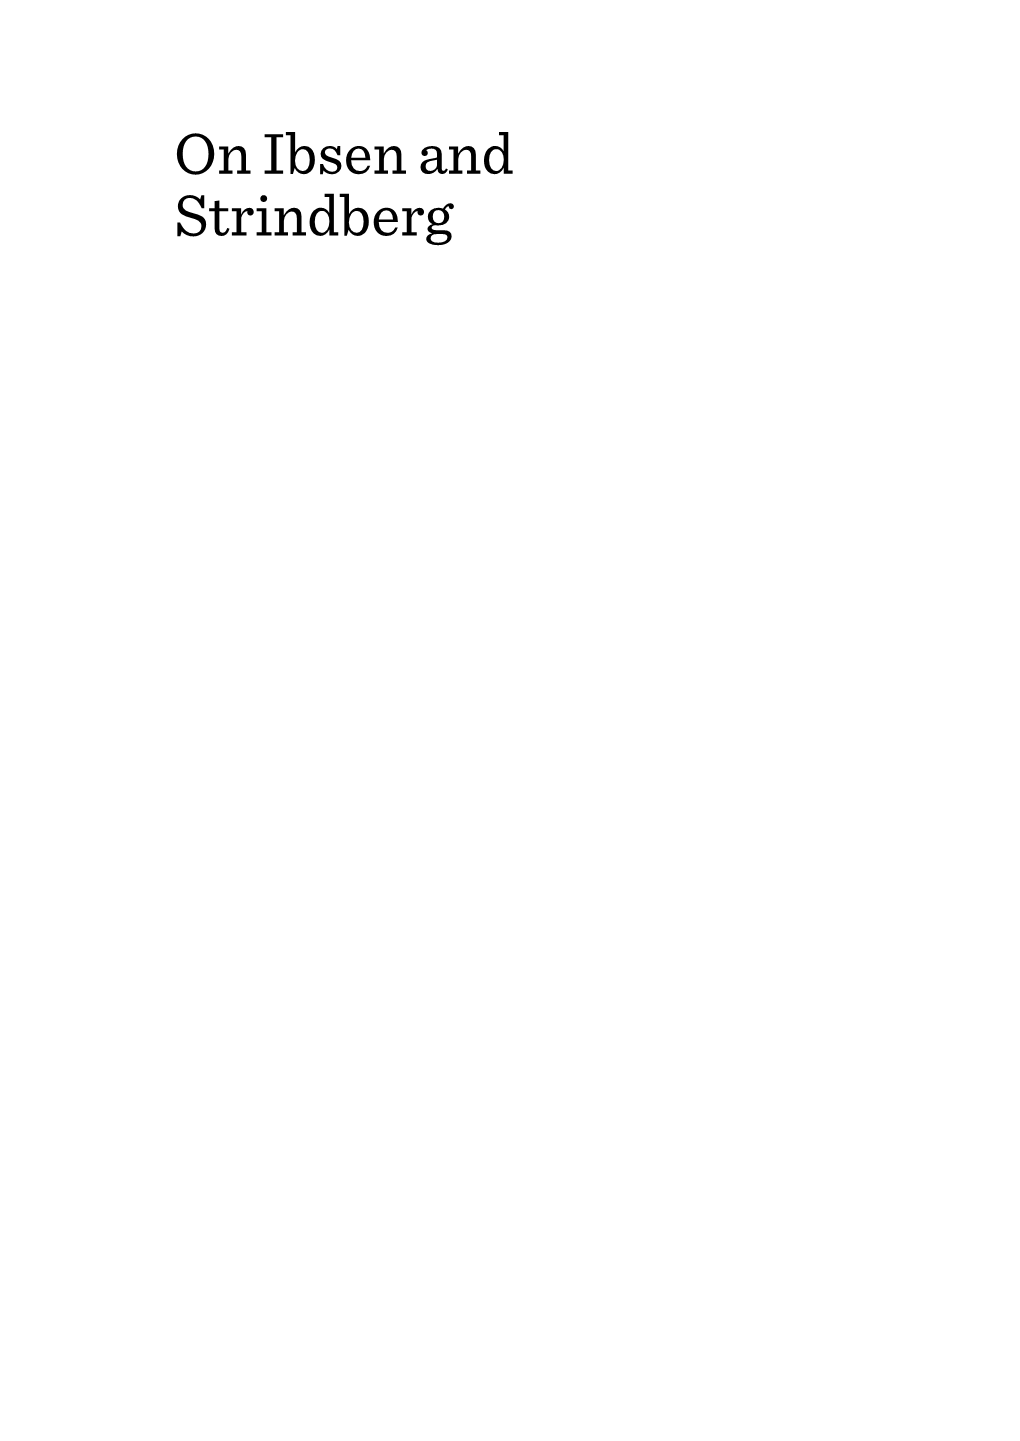 On Ibsen and Strindberg